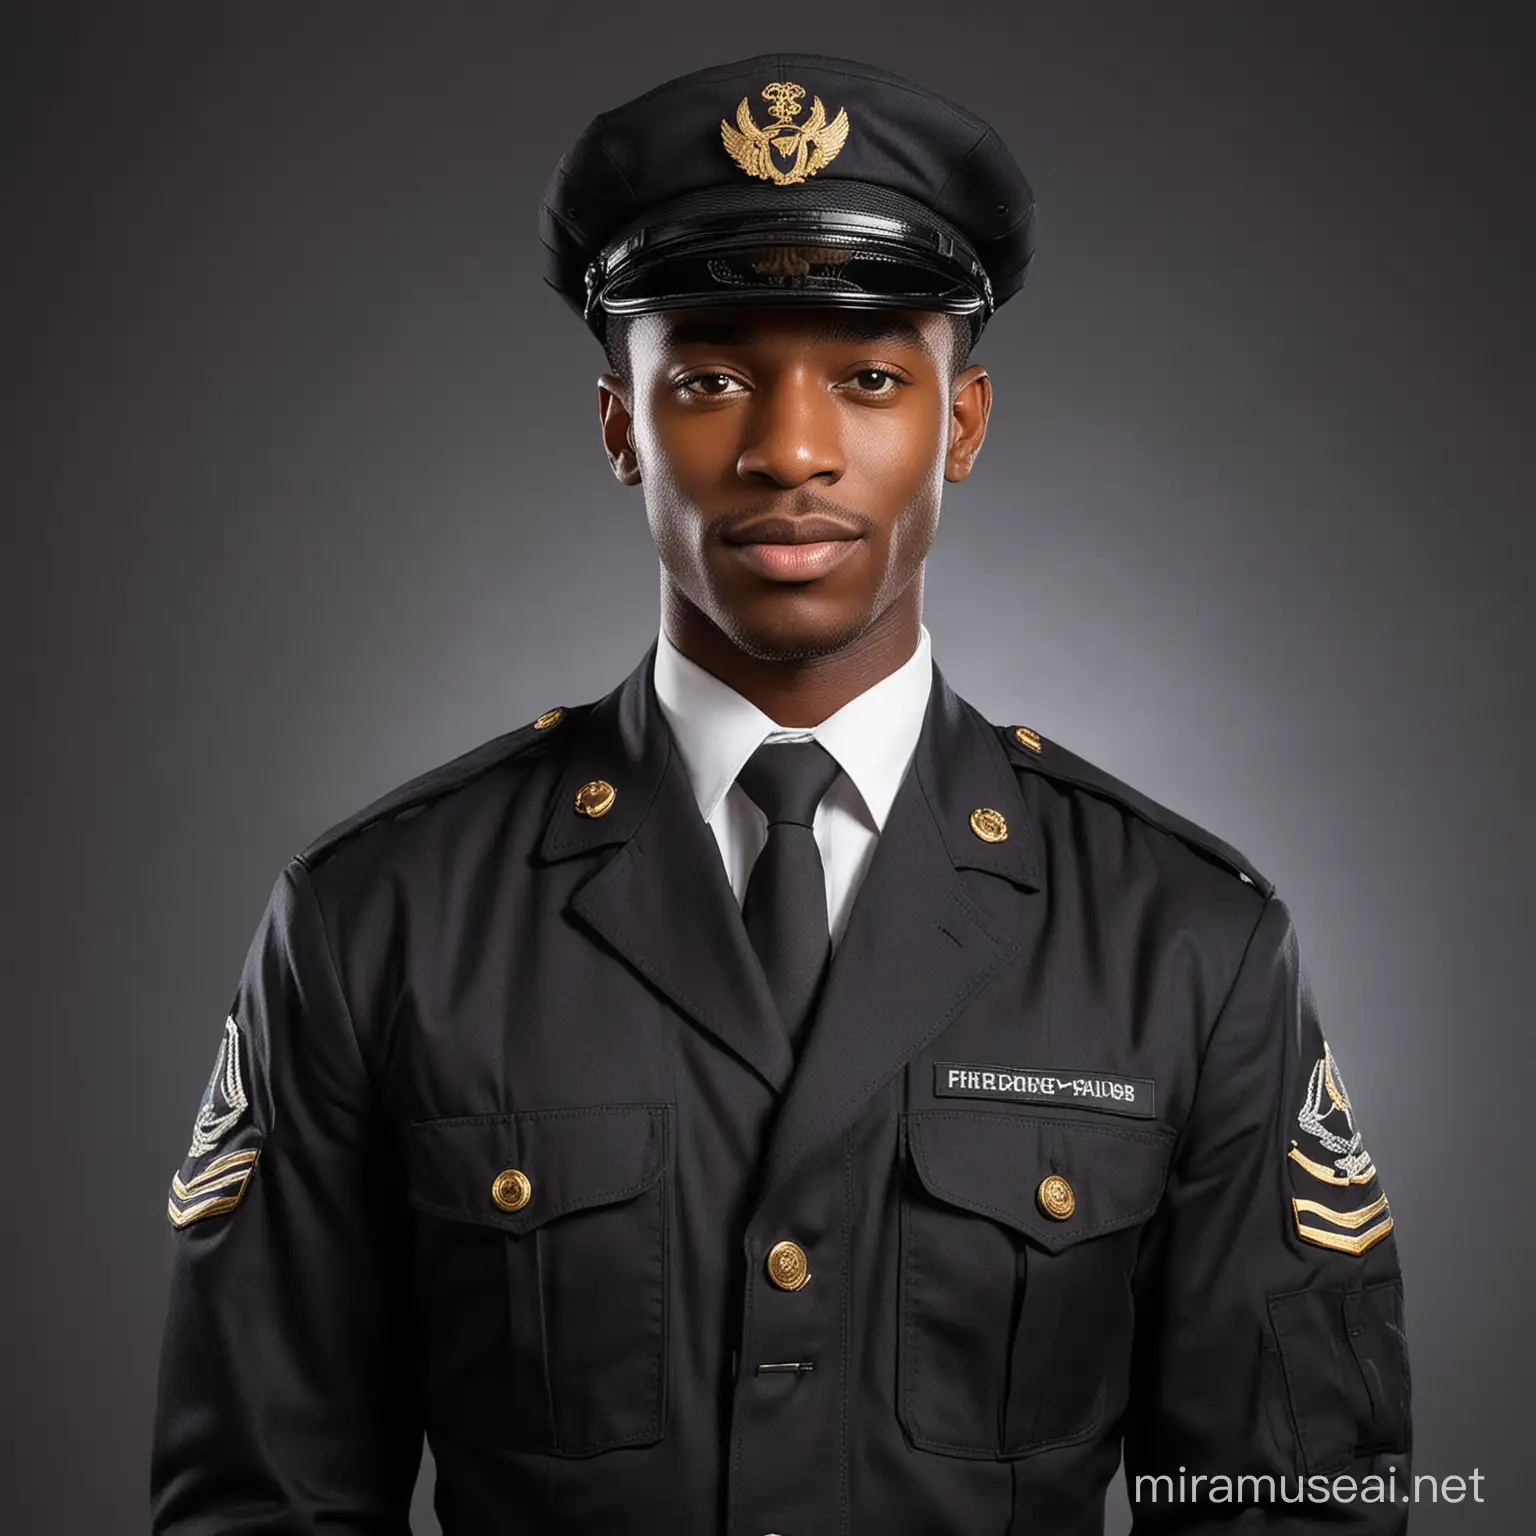 Confident Black Airline Pilot Wearing Full Uniform